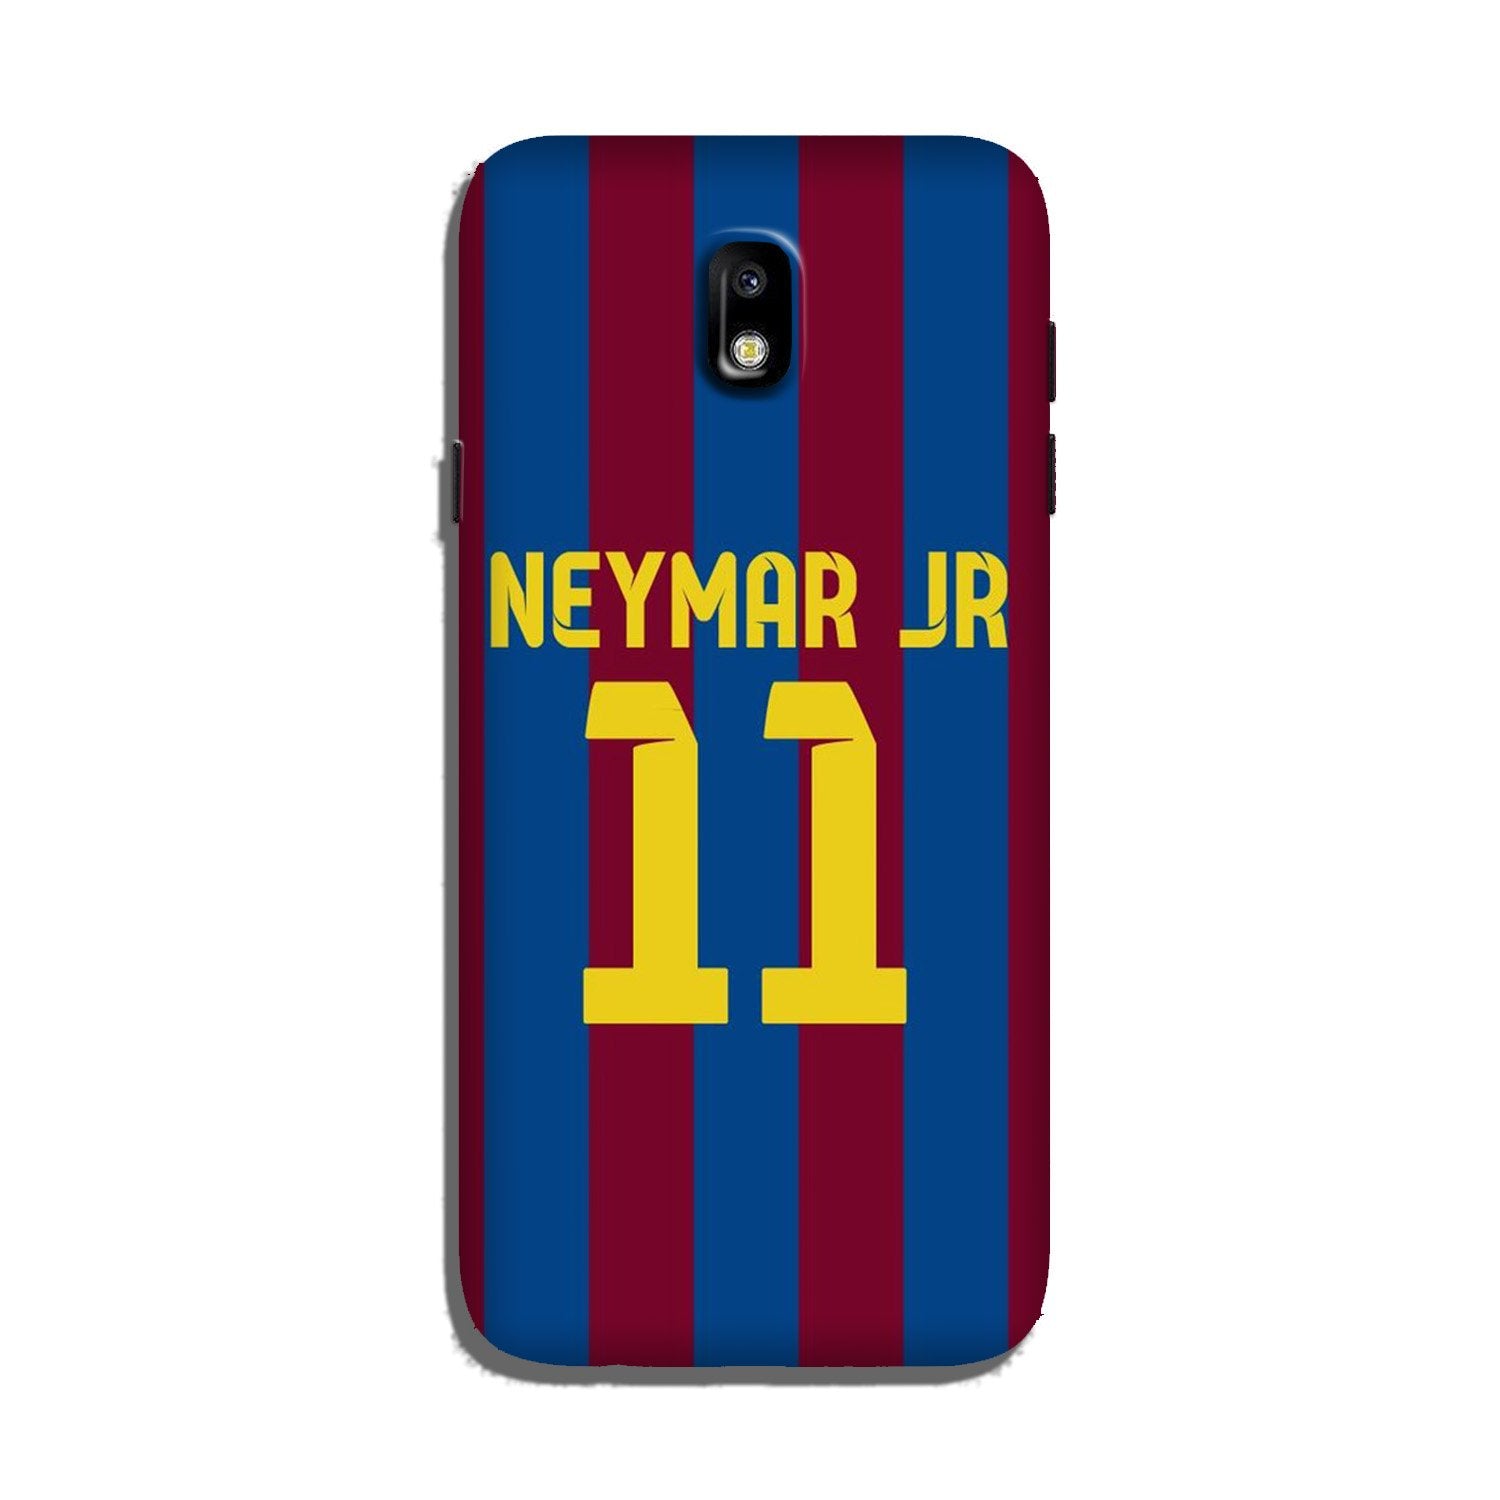 Neymar Jr Case for Galaxy J3 Pro(Design - 162)